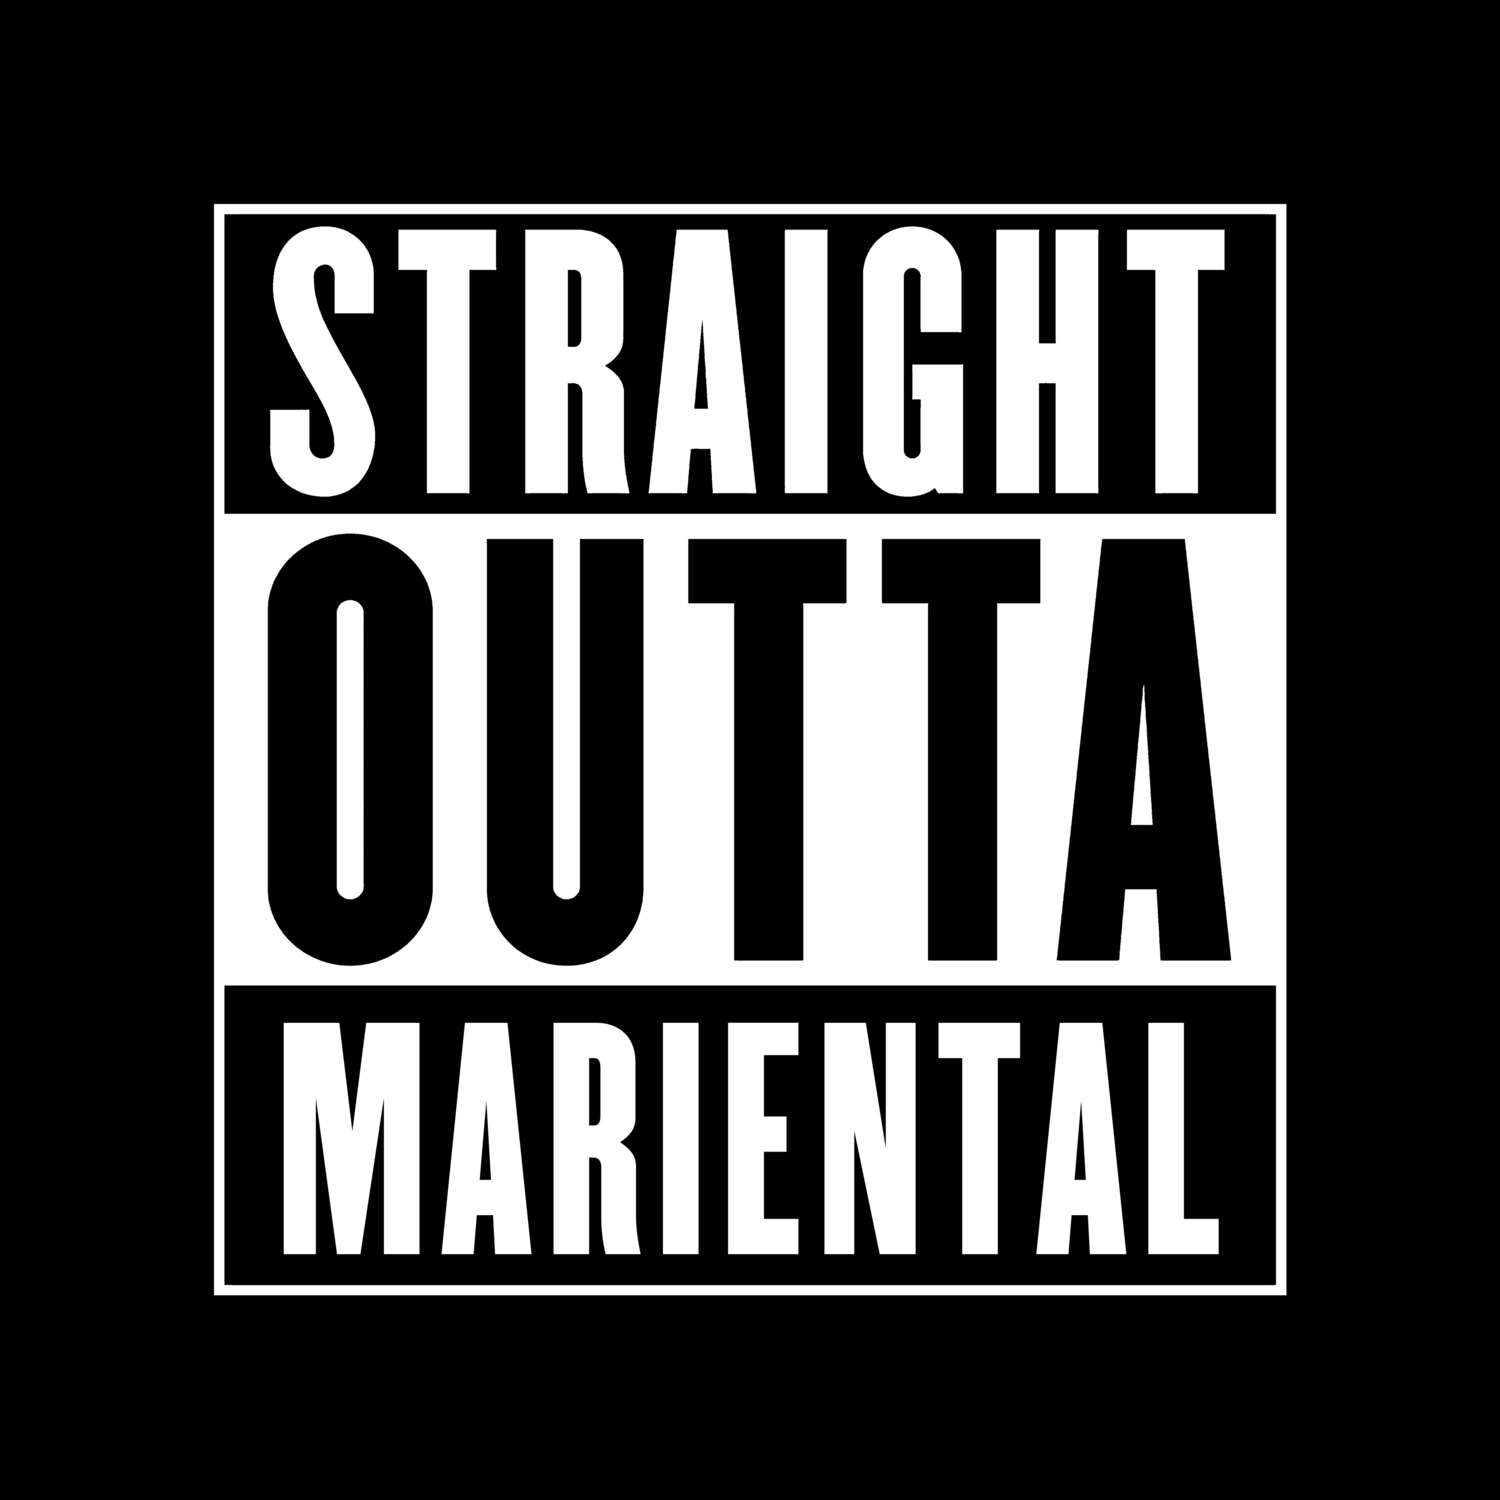 Mariental T-Shirt »Straight Outta«